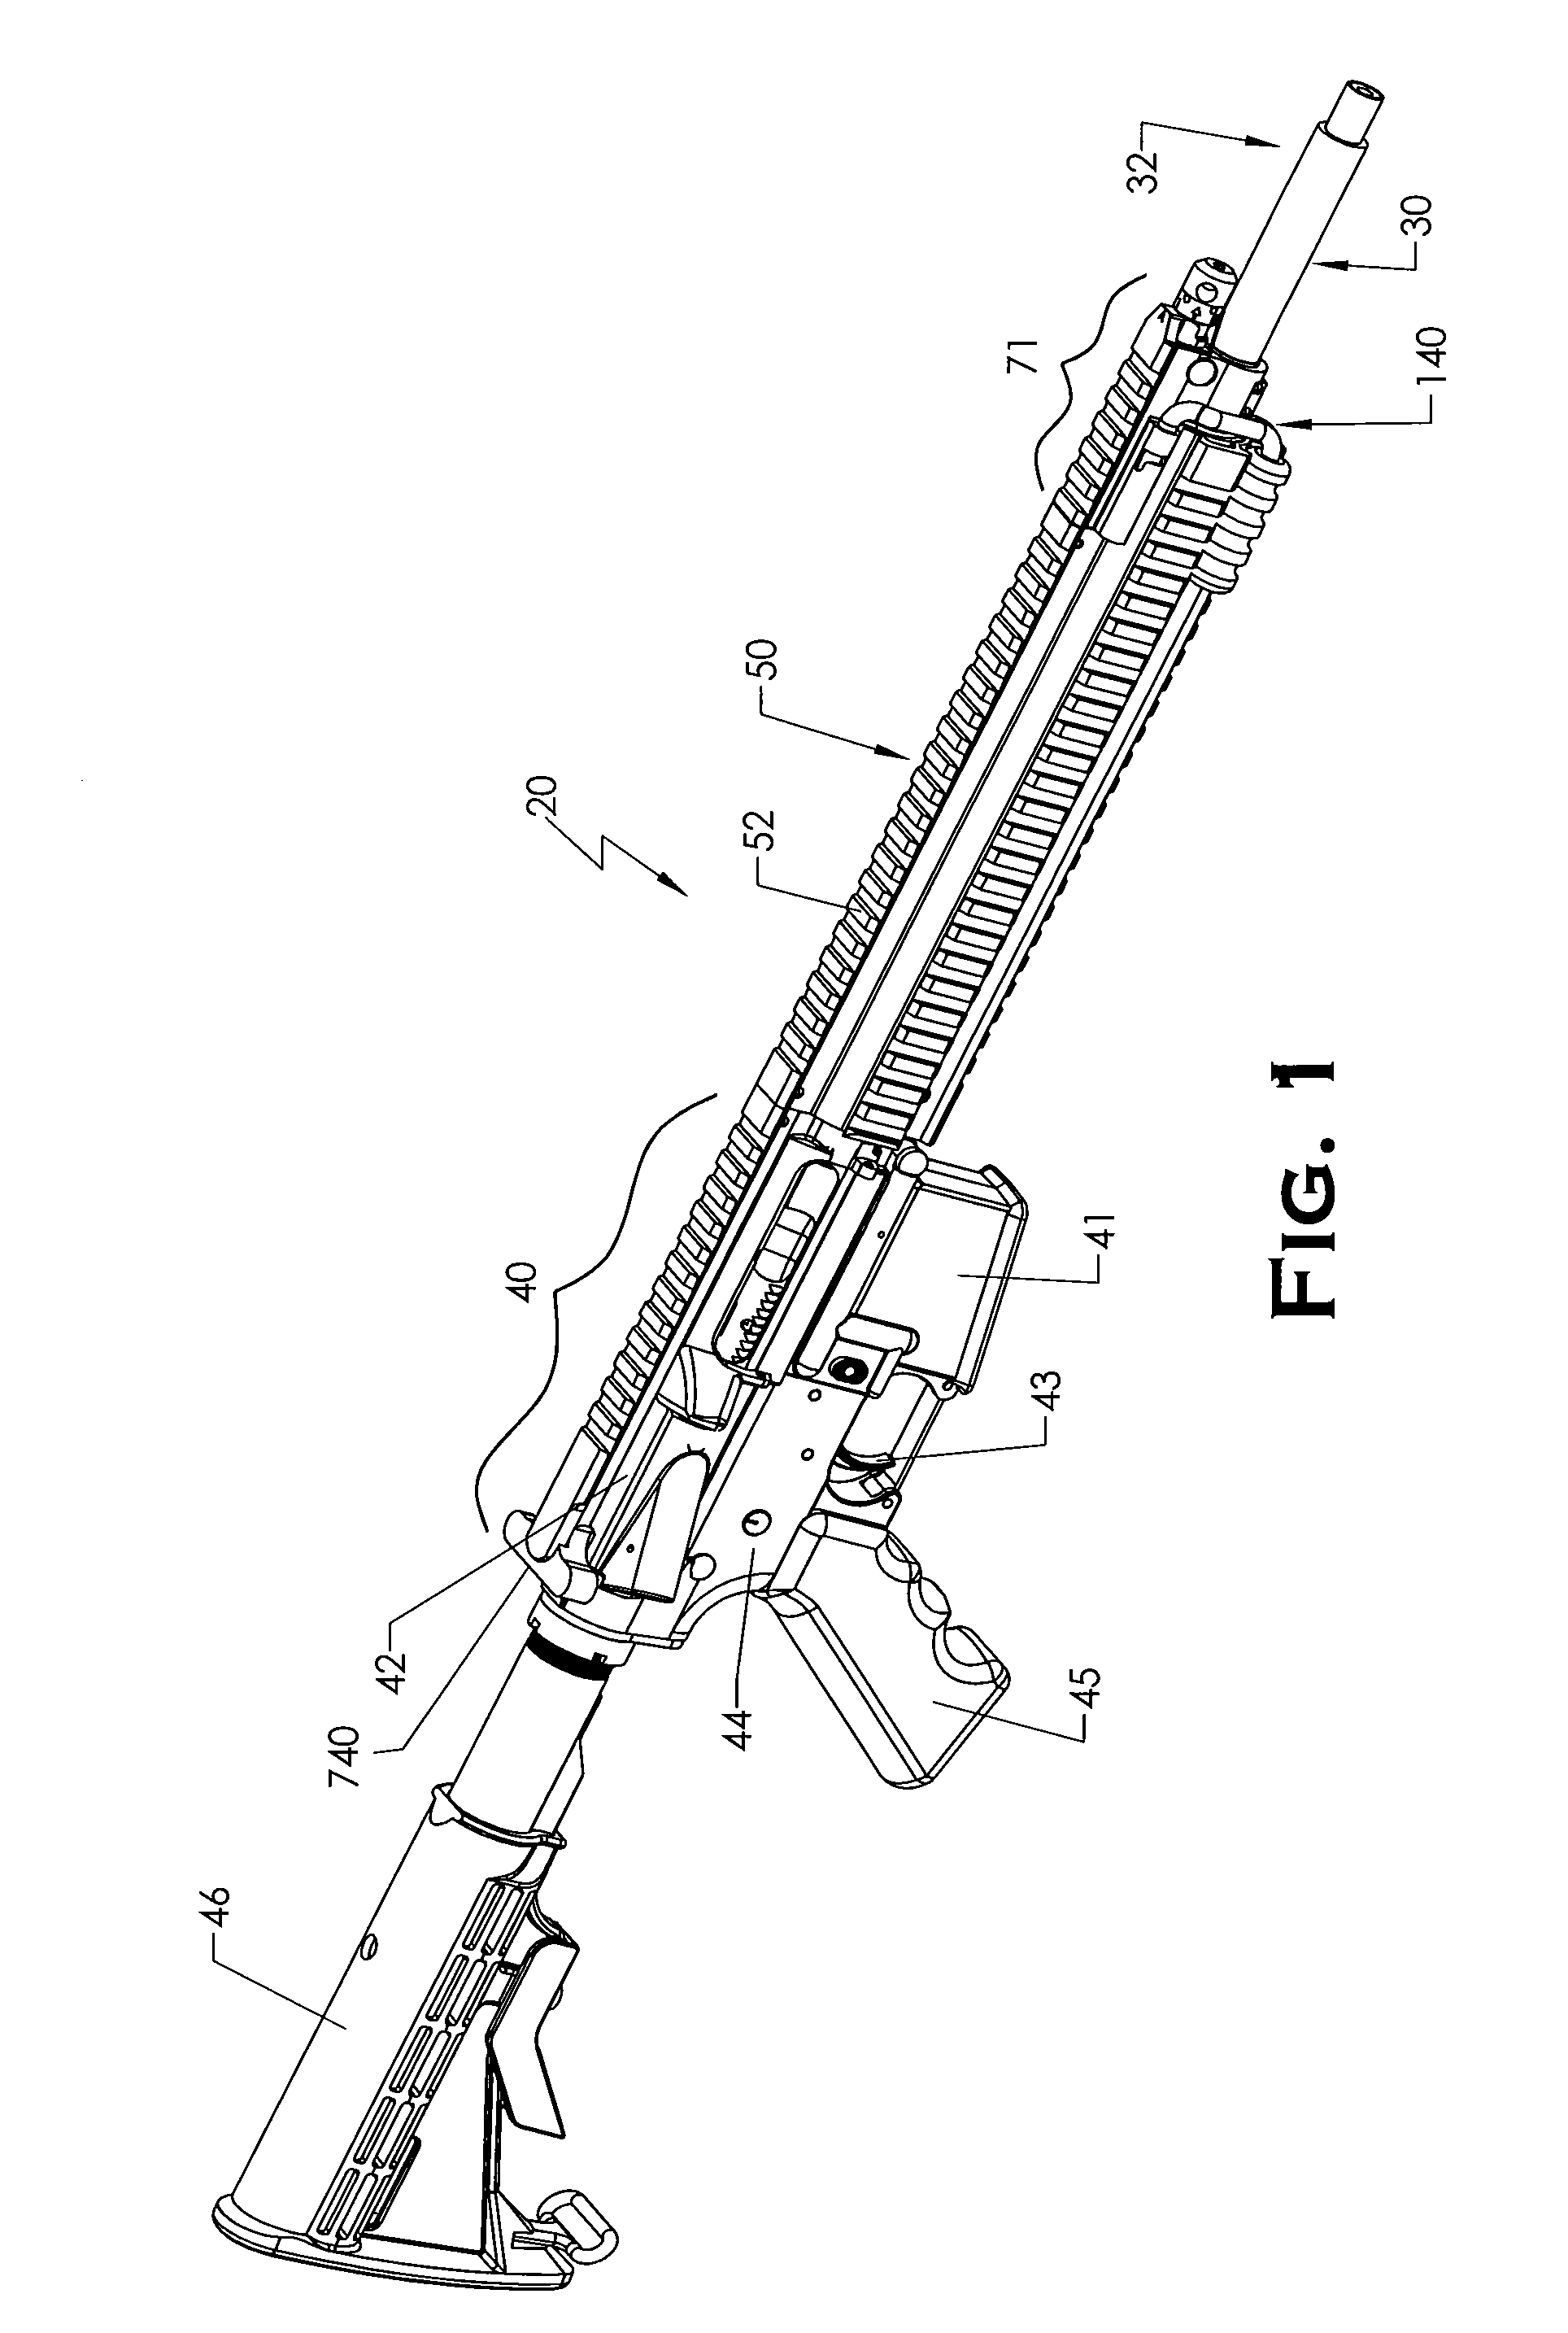 Firearm with quick coupling barrel interlock system